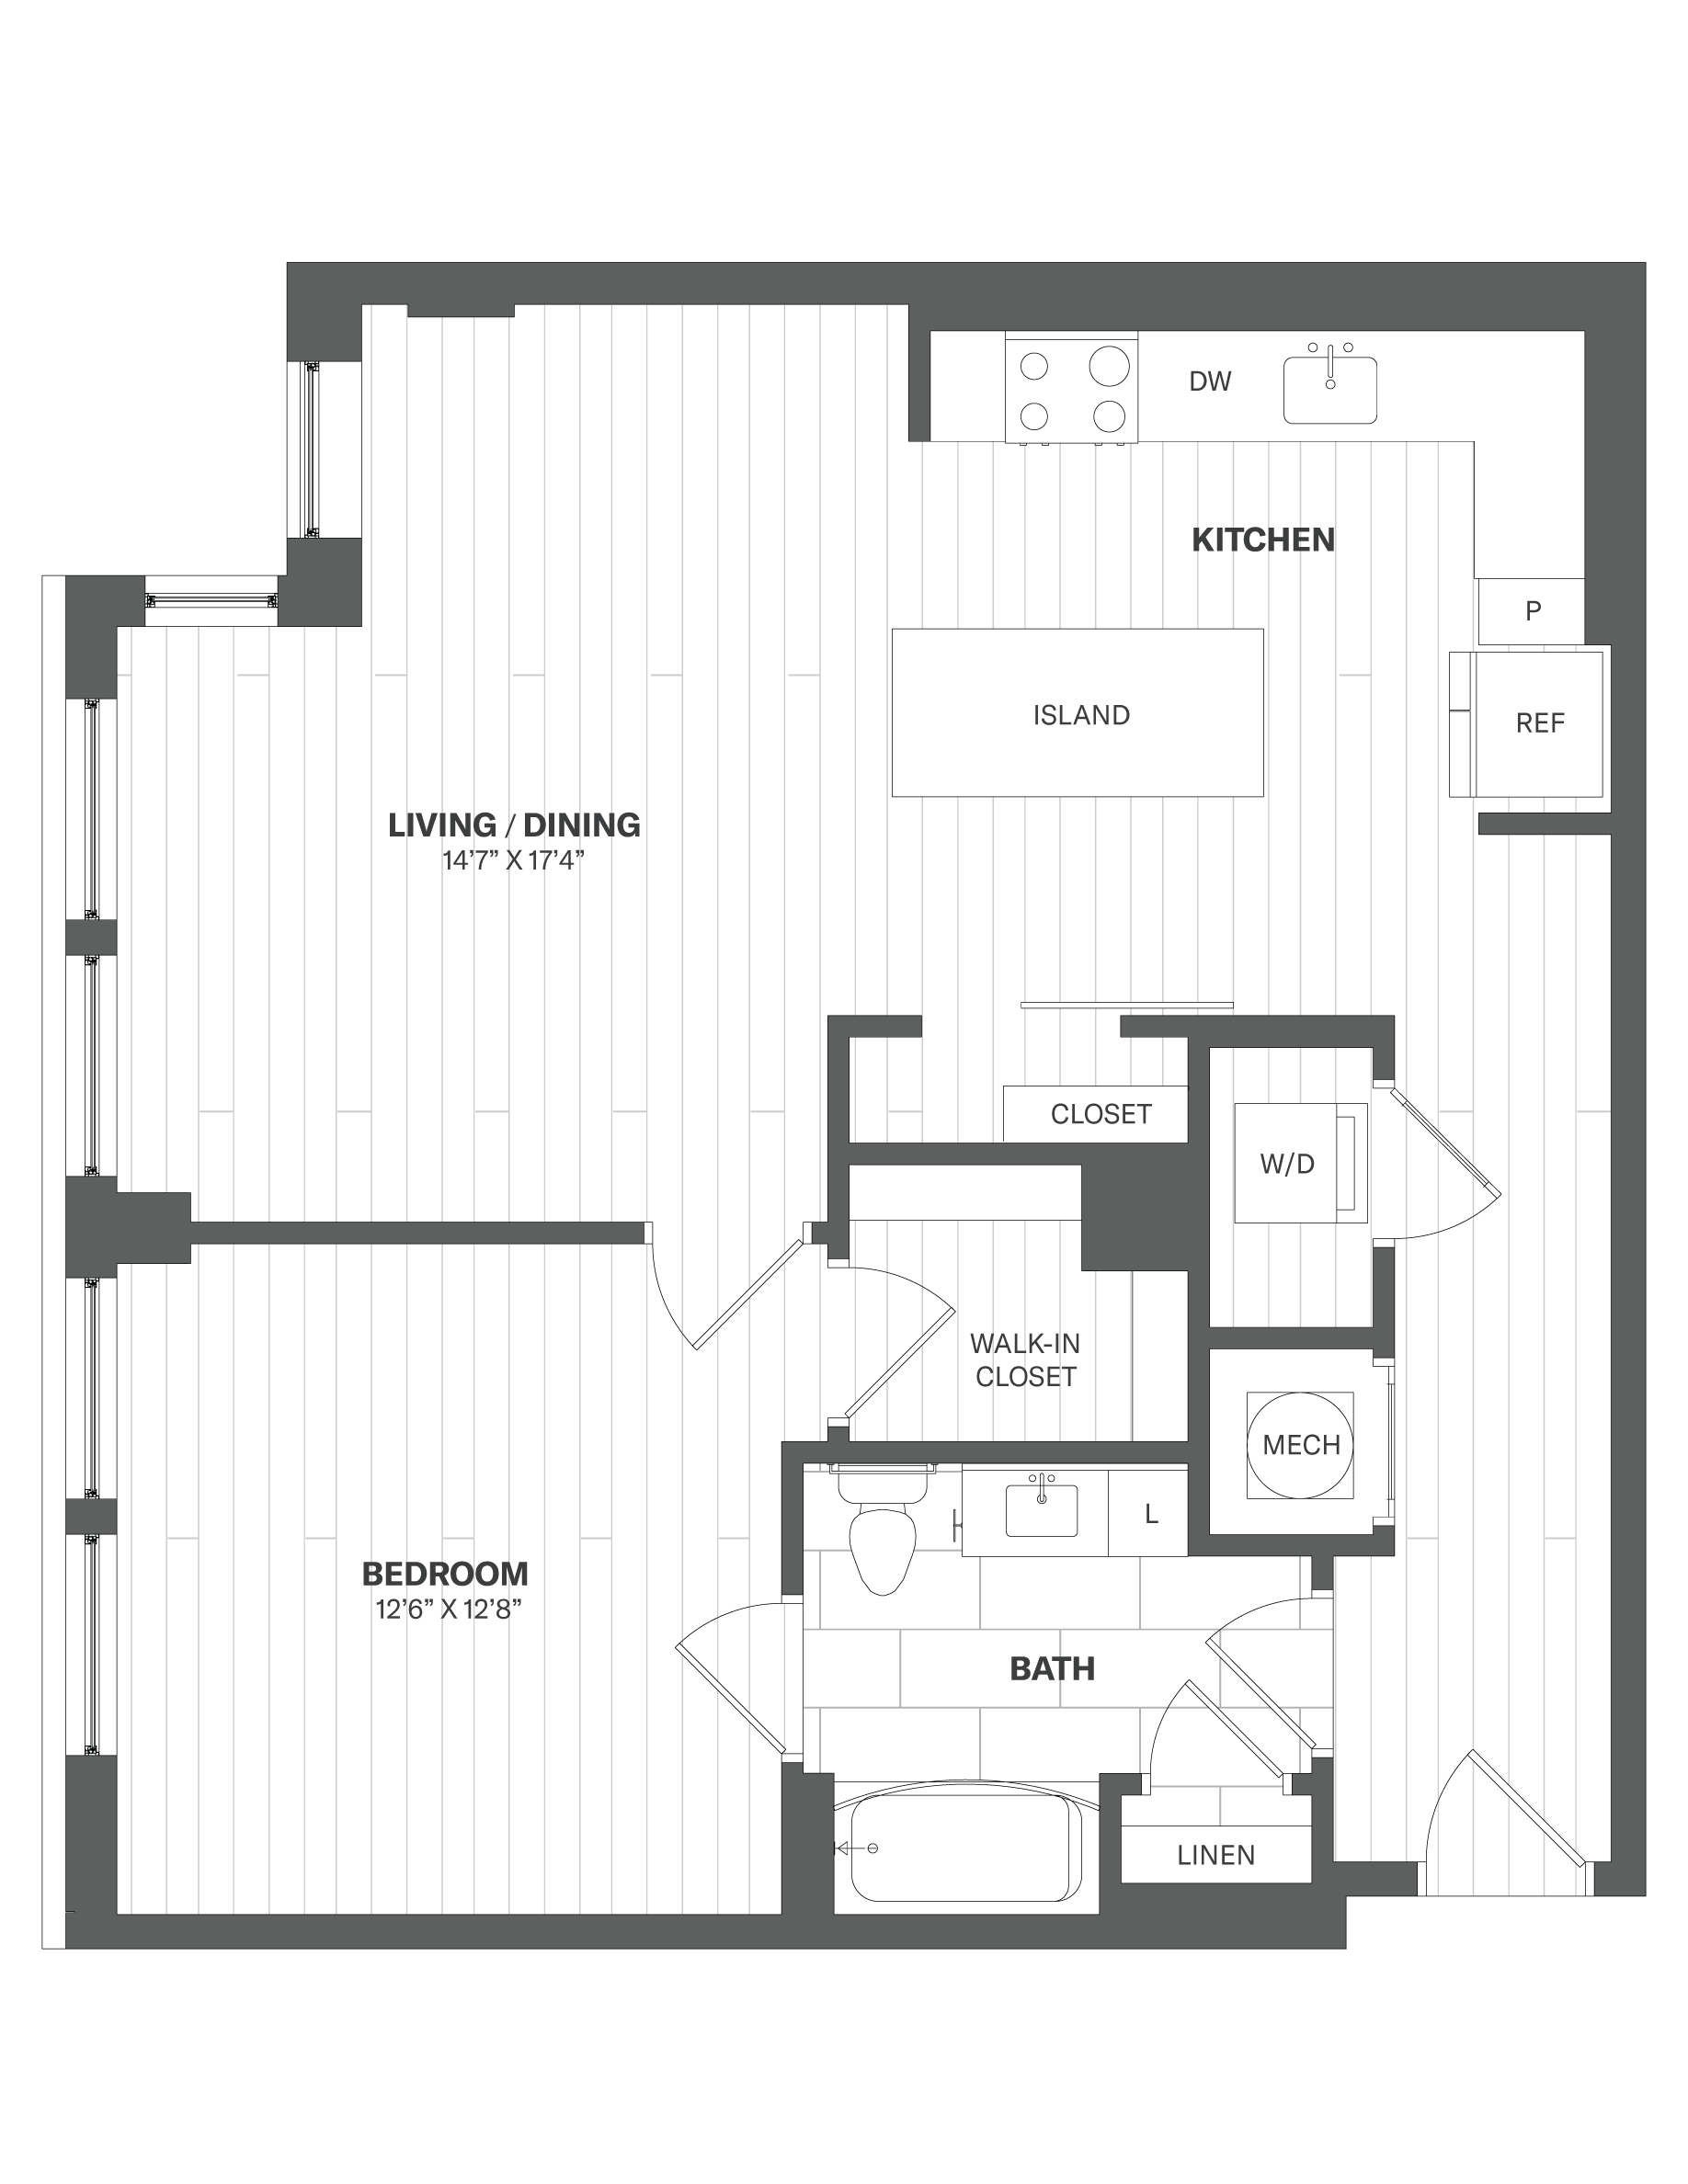 Apartment 336 floorplan